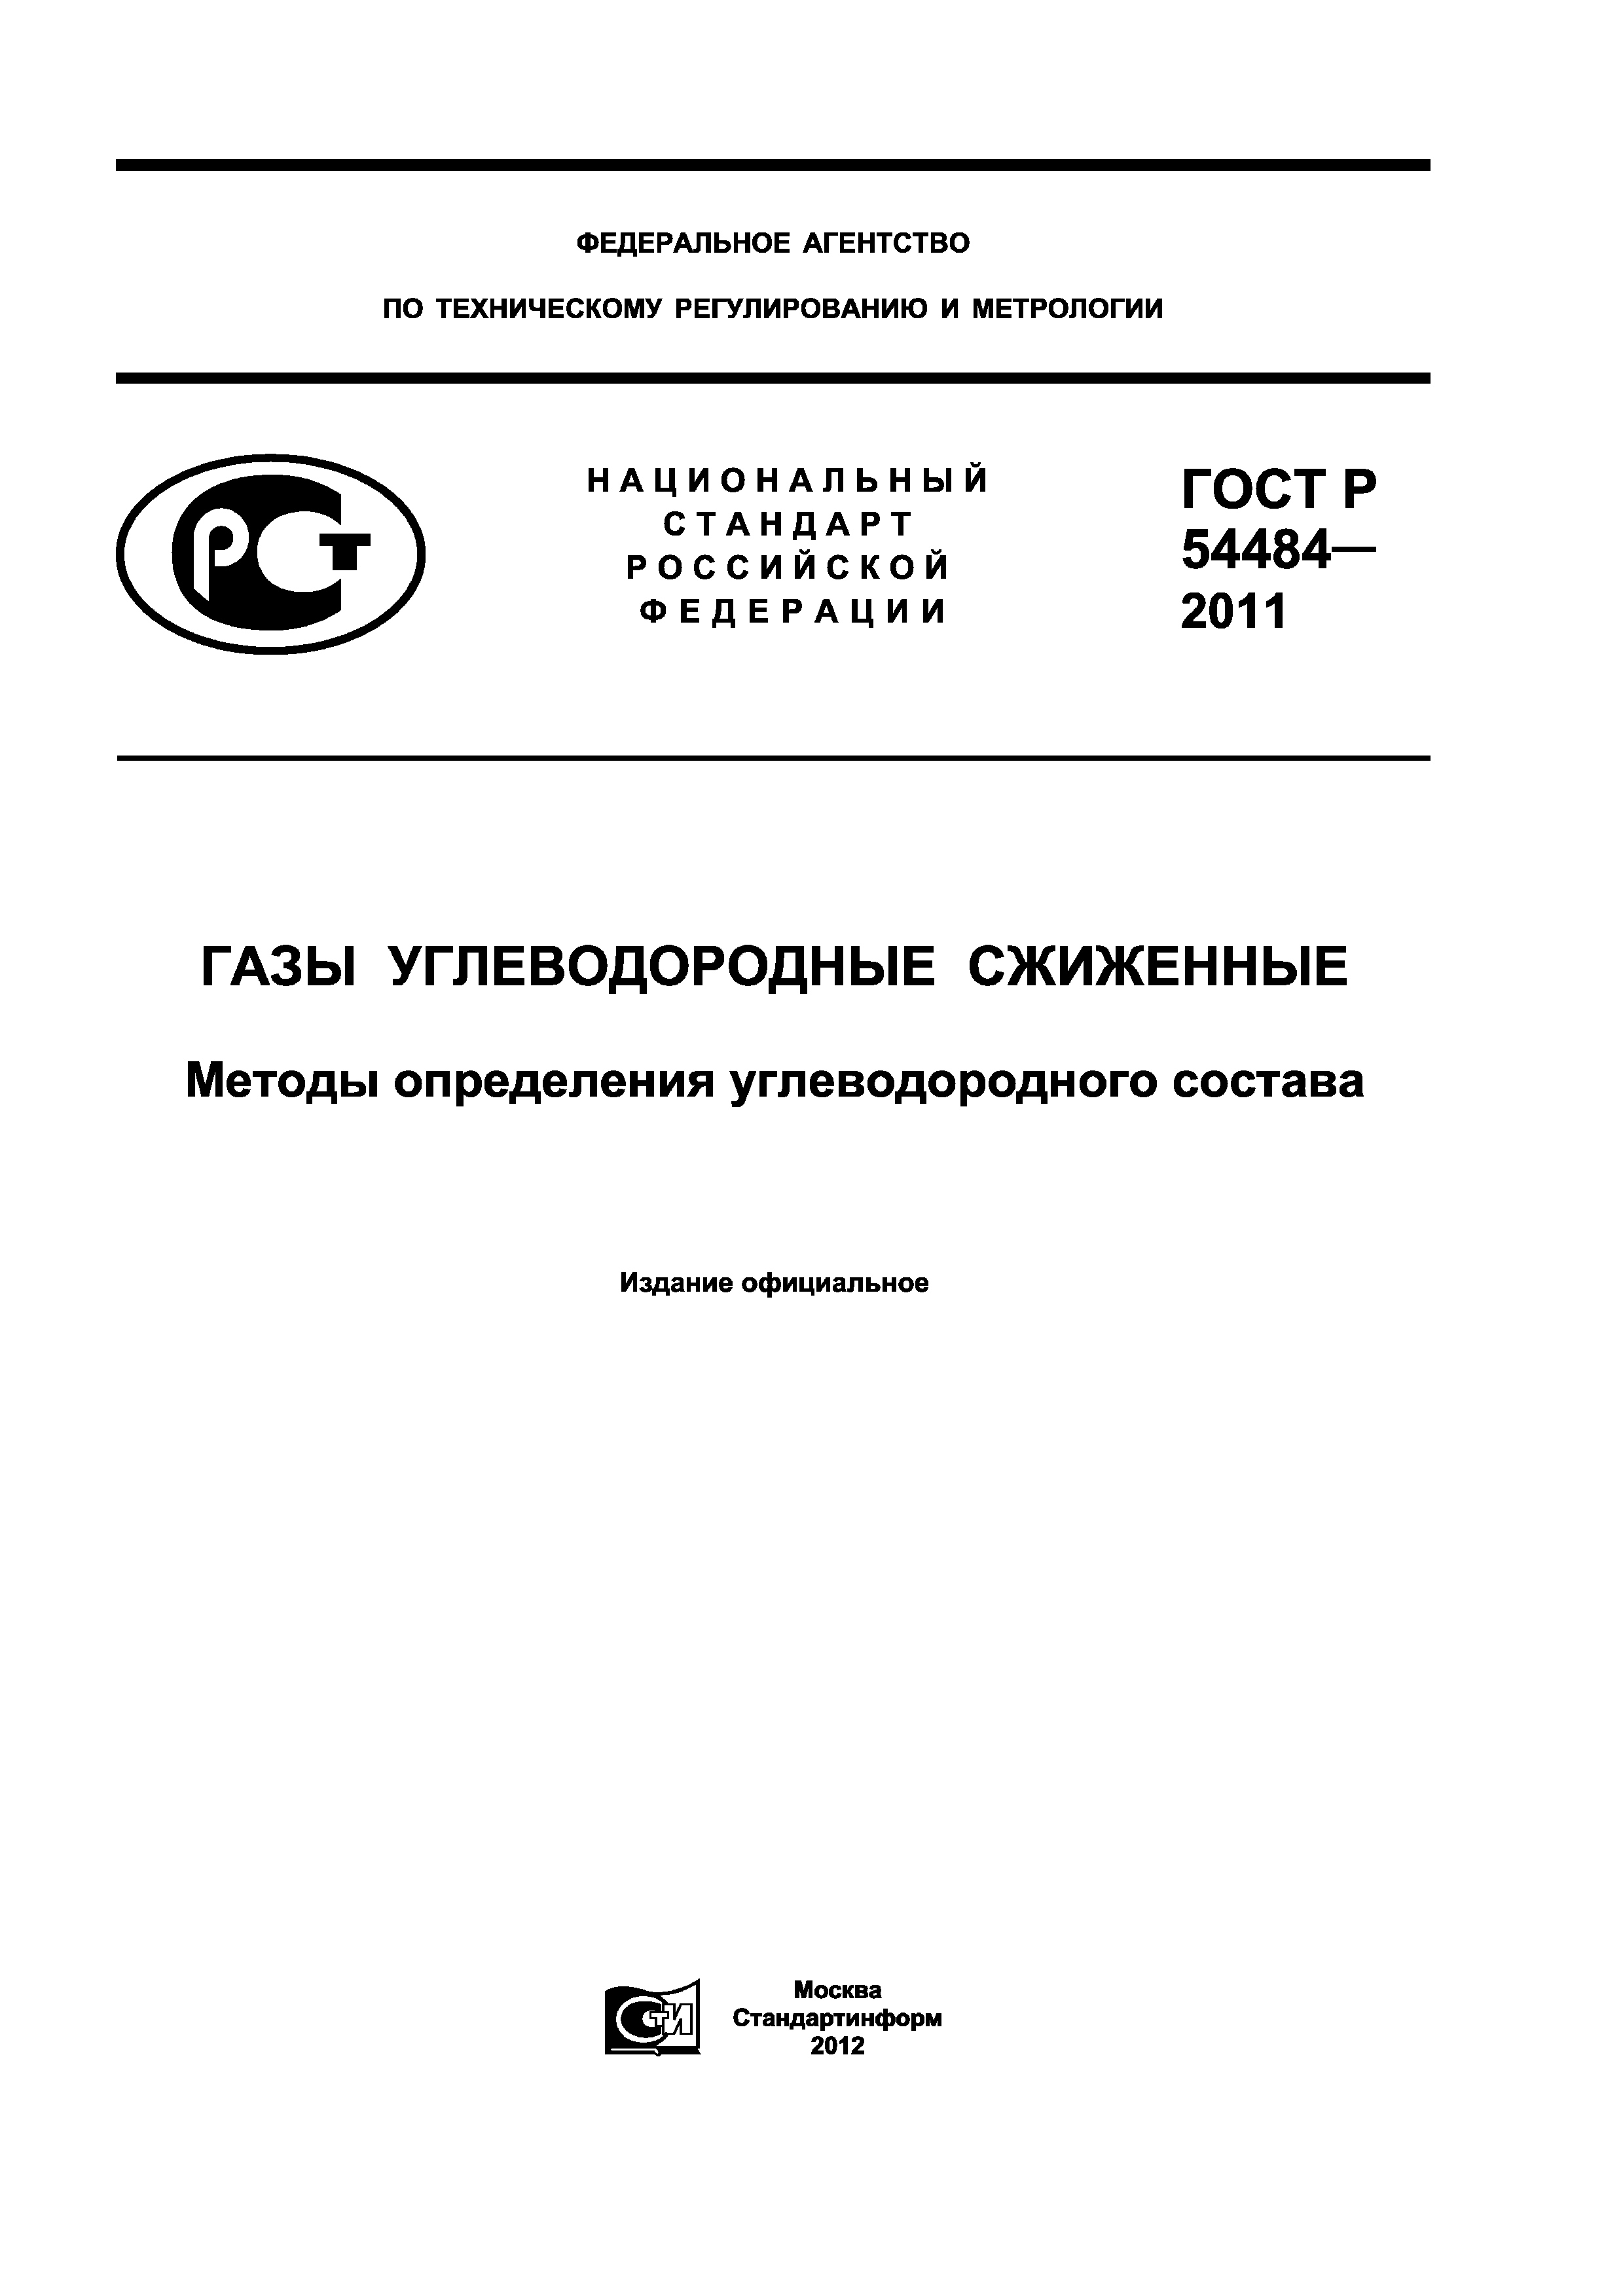 ГОСТ Р 54484-2011